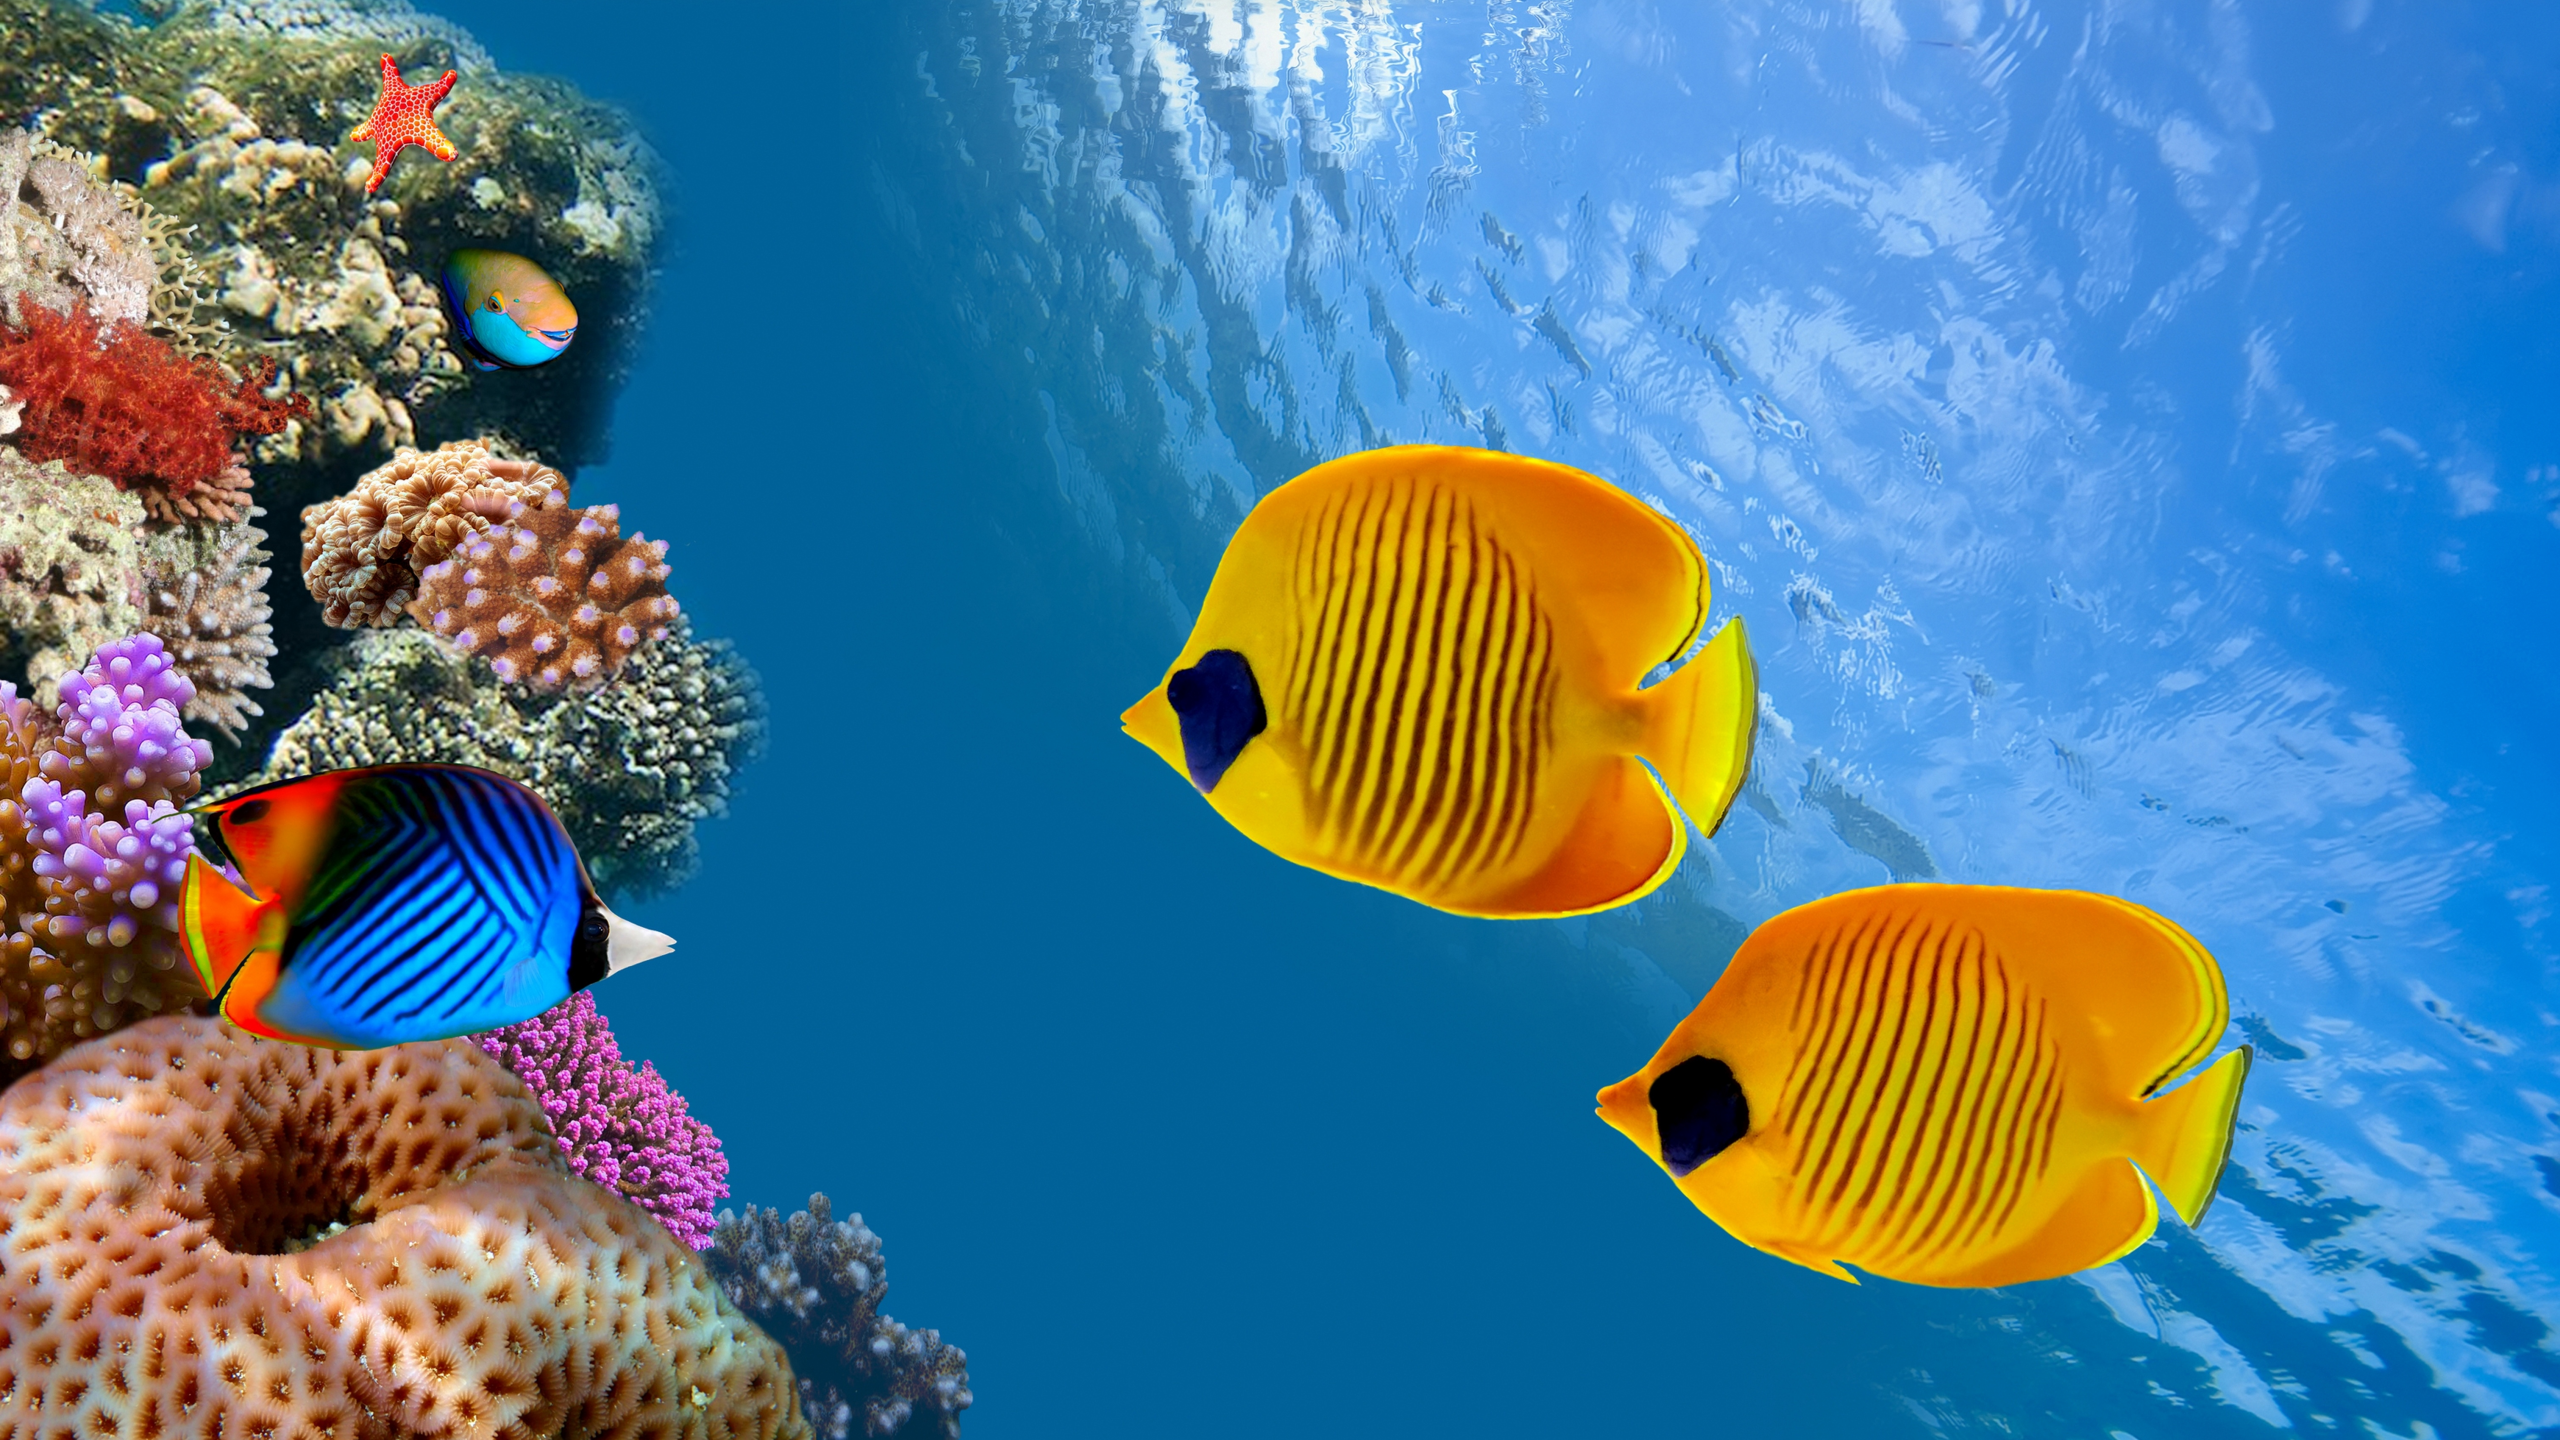 underwater, reef, колонии кораллов, coral colony, thailand, siam bay, fish, ocean